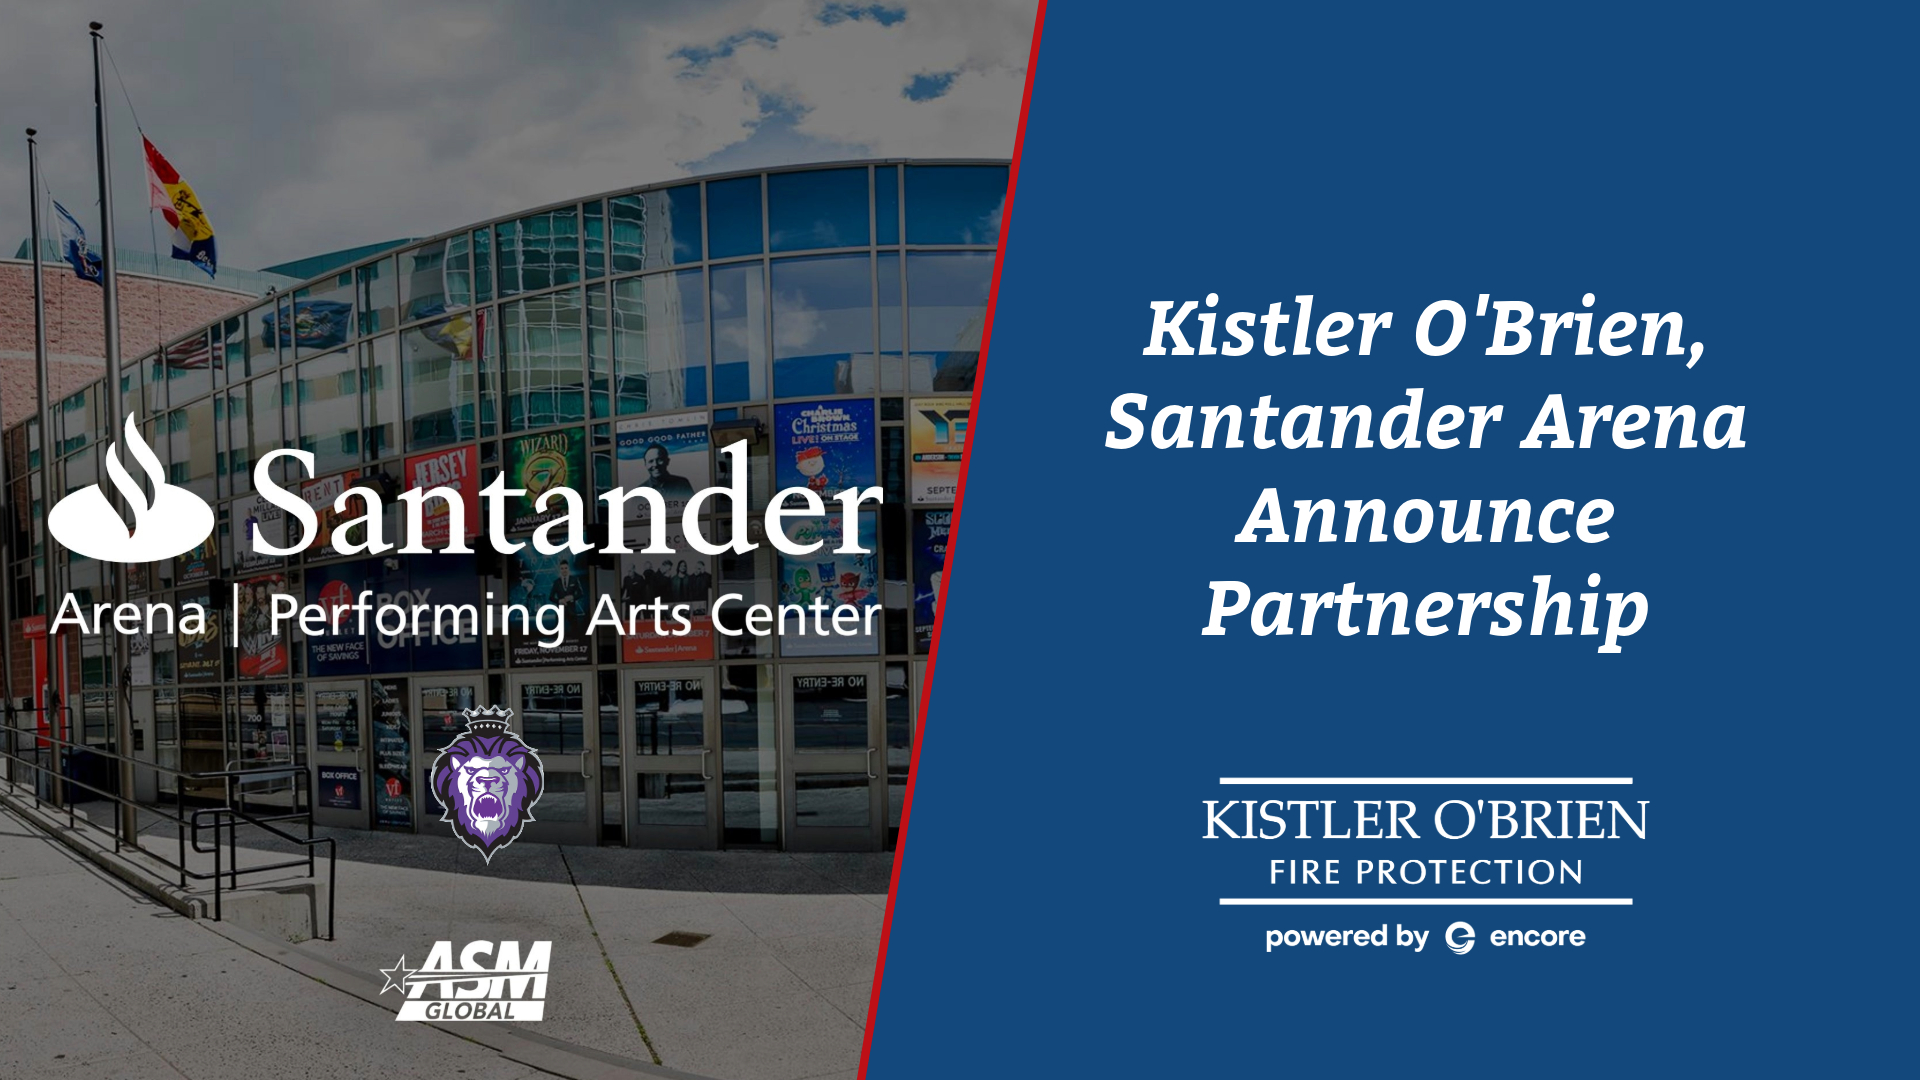 Image announcing partnership between Santander Arena and Kistler O'Brien Fire Protection